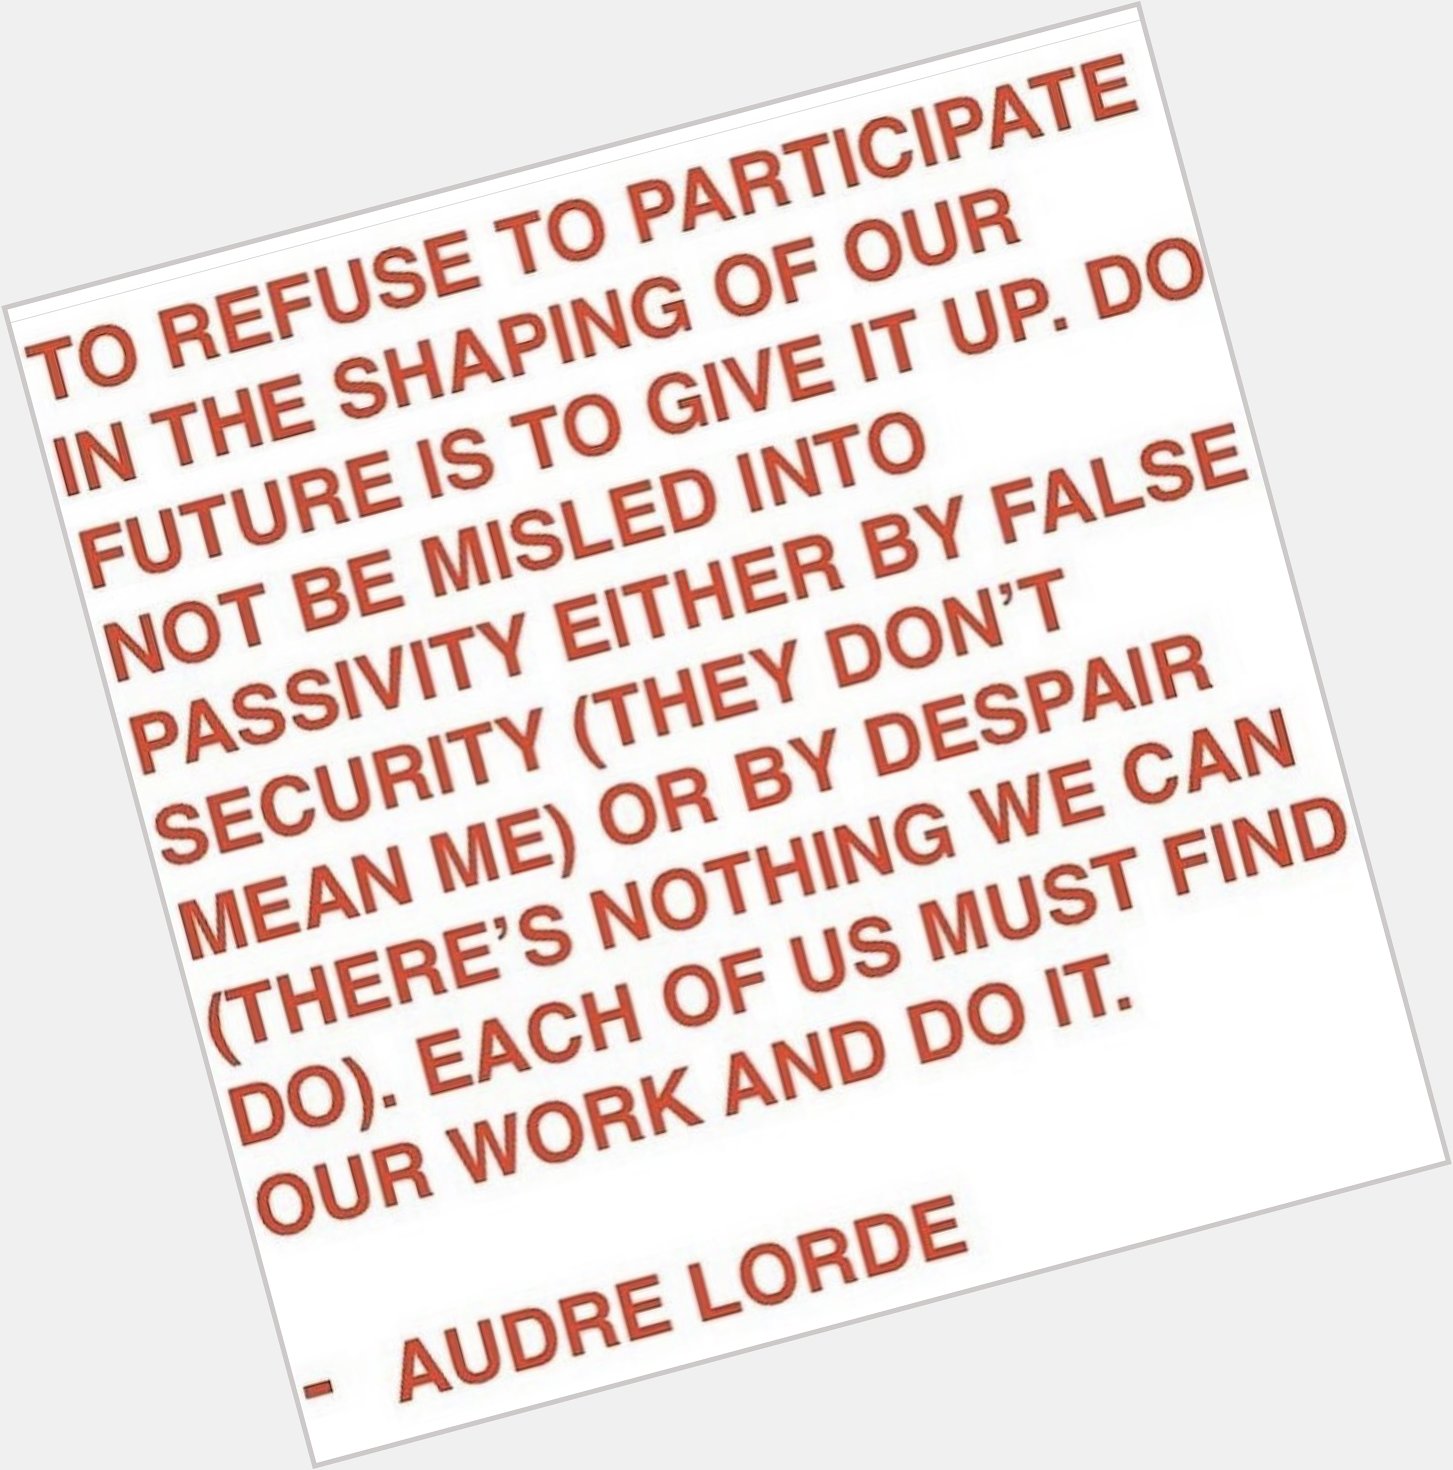 Happy birthday Audre Lorde!! 